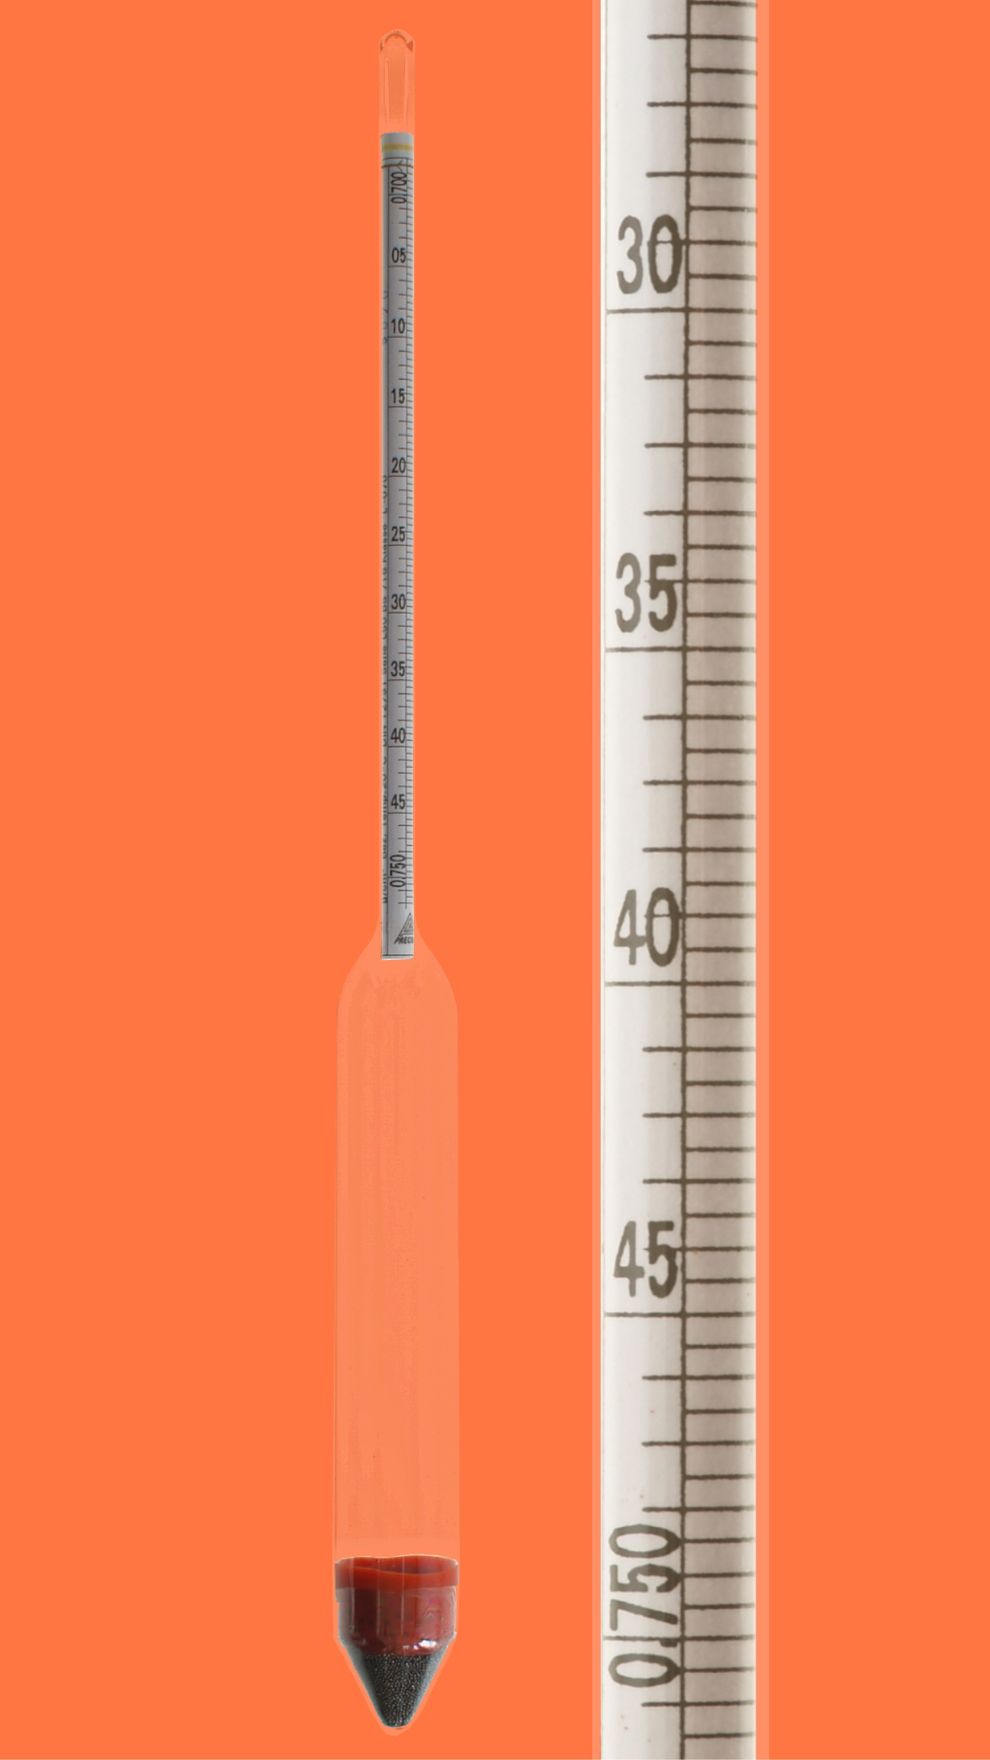 Aräometer, DIN 12791, L50, 0,85-0,90:0,0005g/cm³, Bezugstemp. 20°C, ohne Thermometer